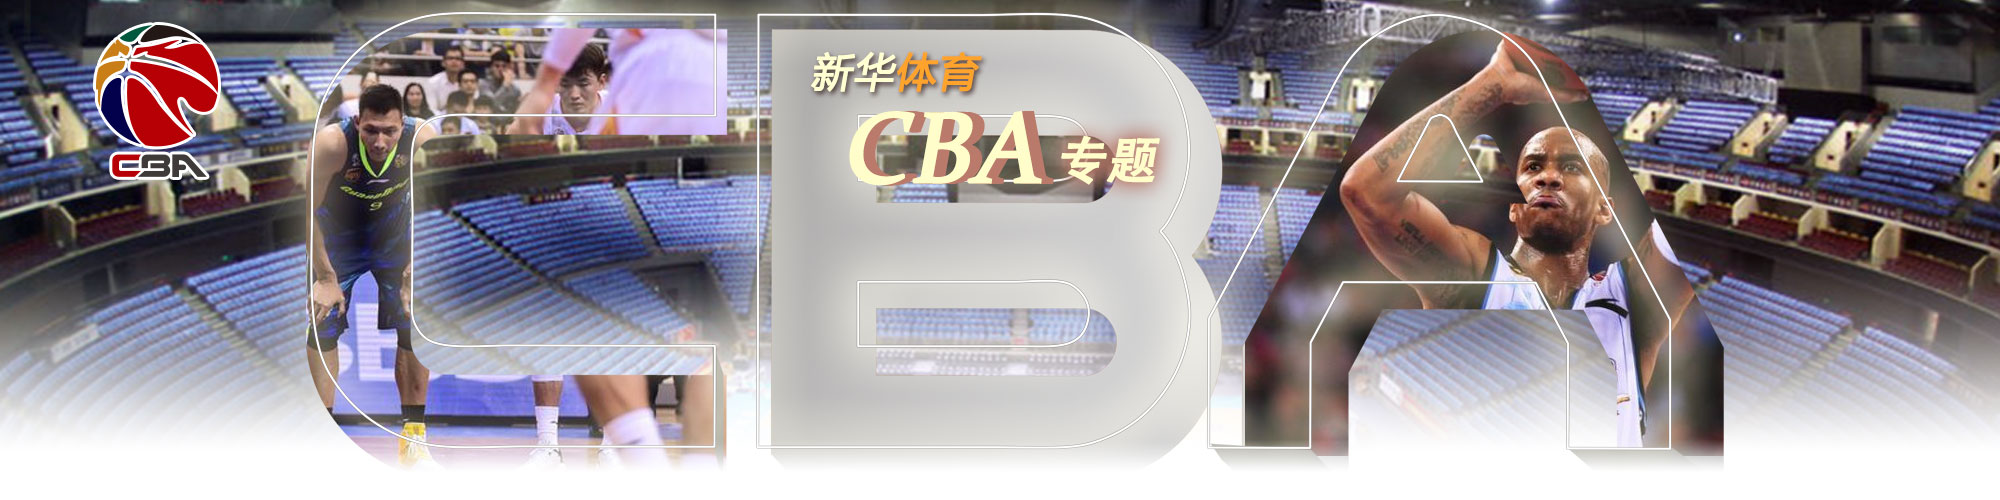 CBA Banner